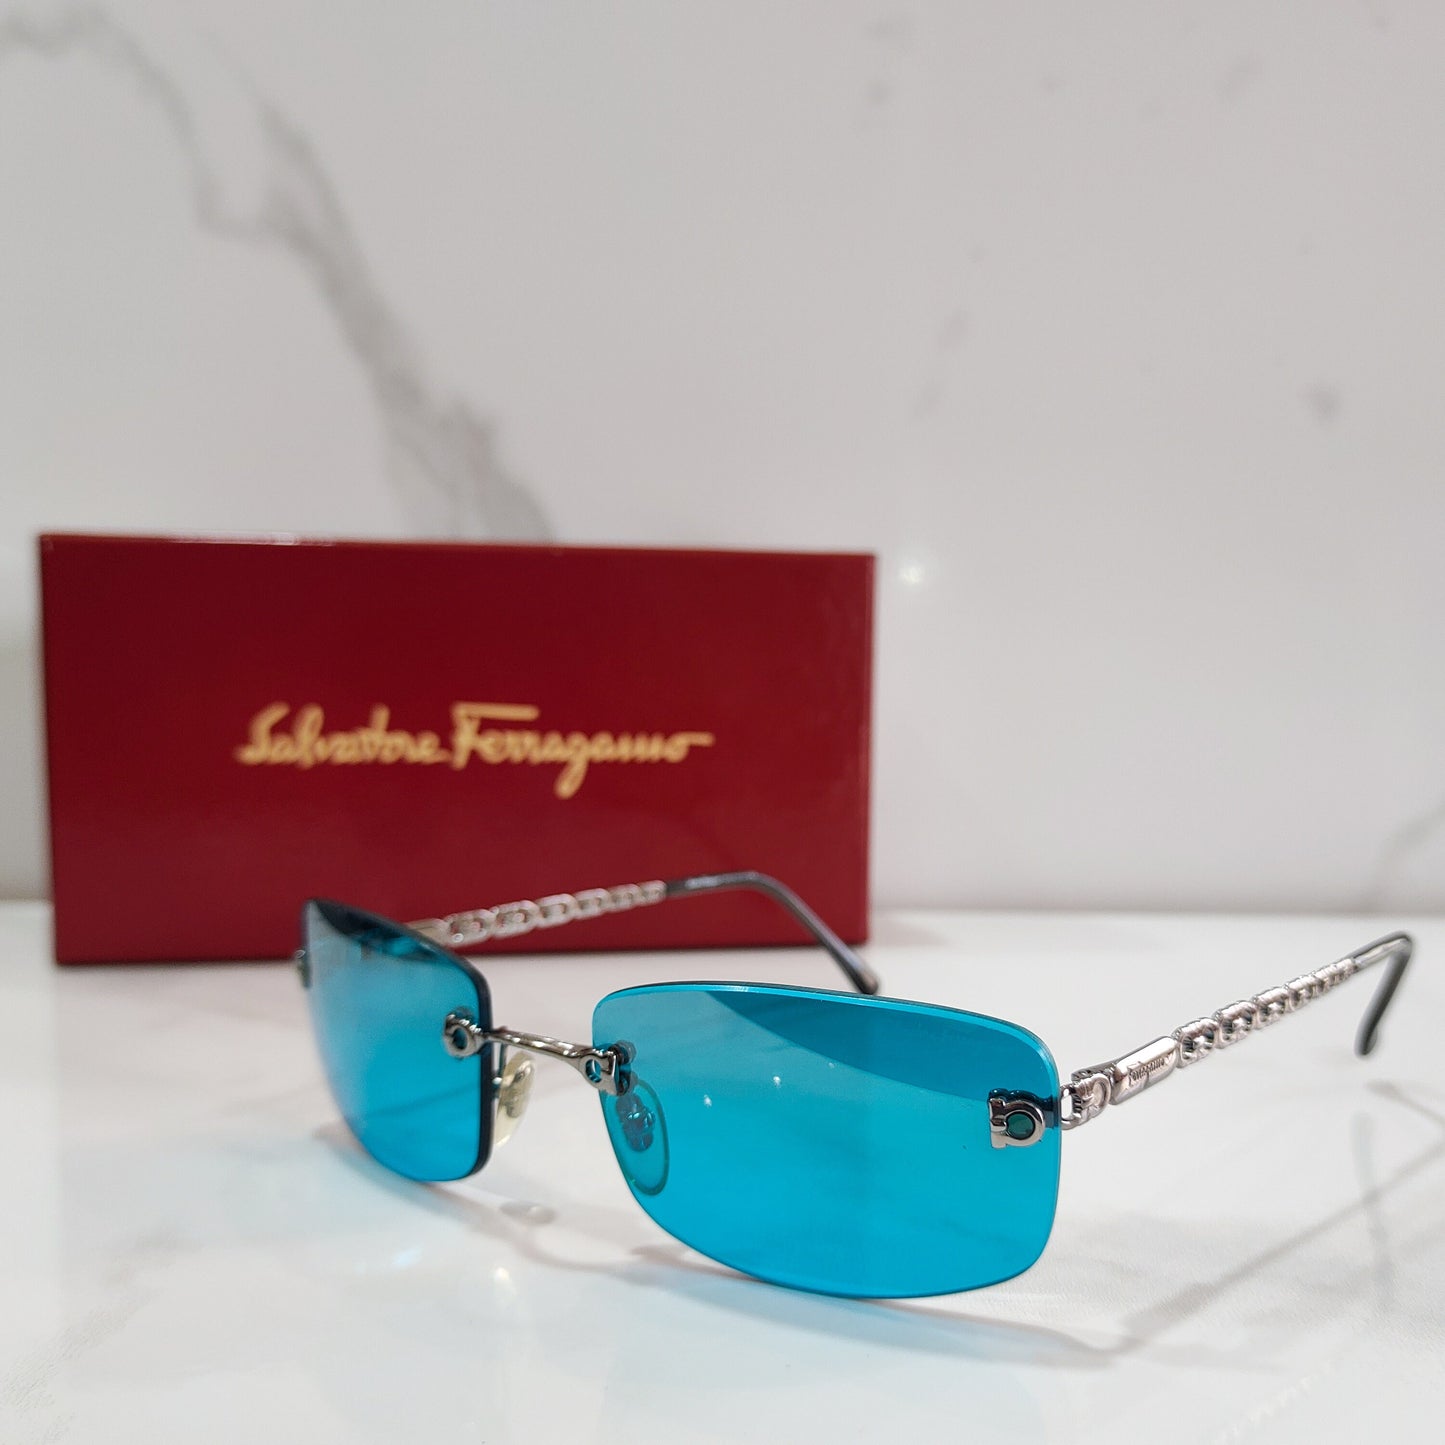 Ferragamo model 1036 rimless sunglasses rimeless bezel brille 90s shades